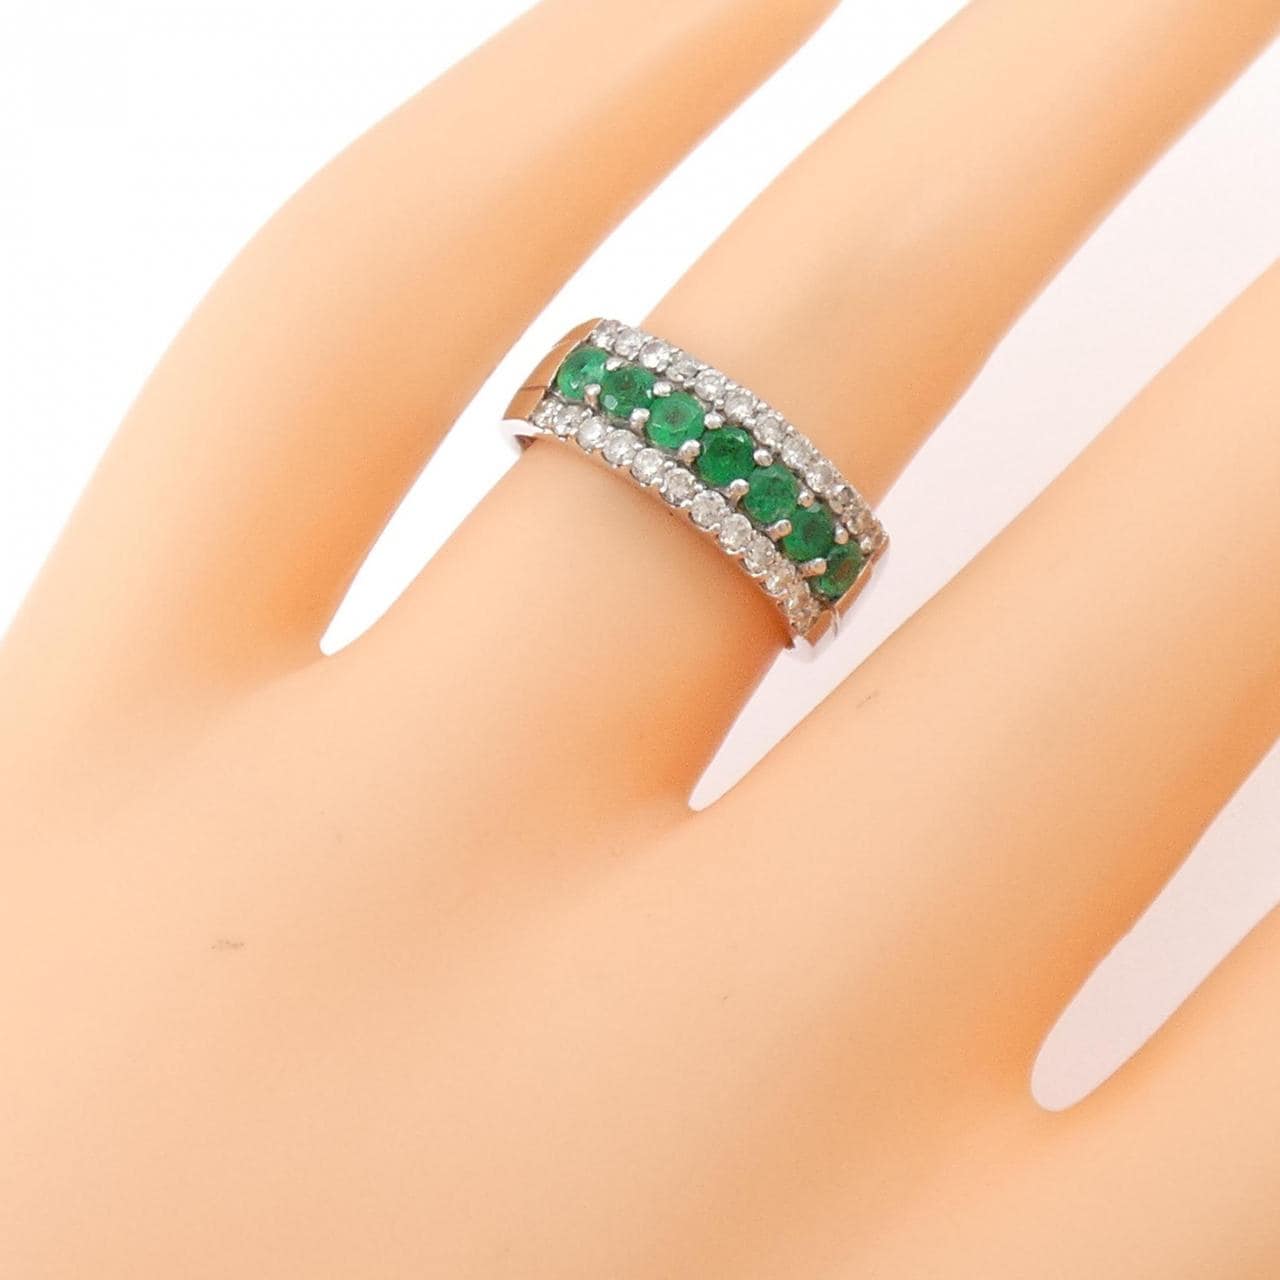 K18WG Emerald Ring 0.51CT